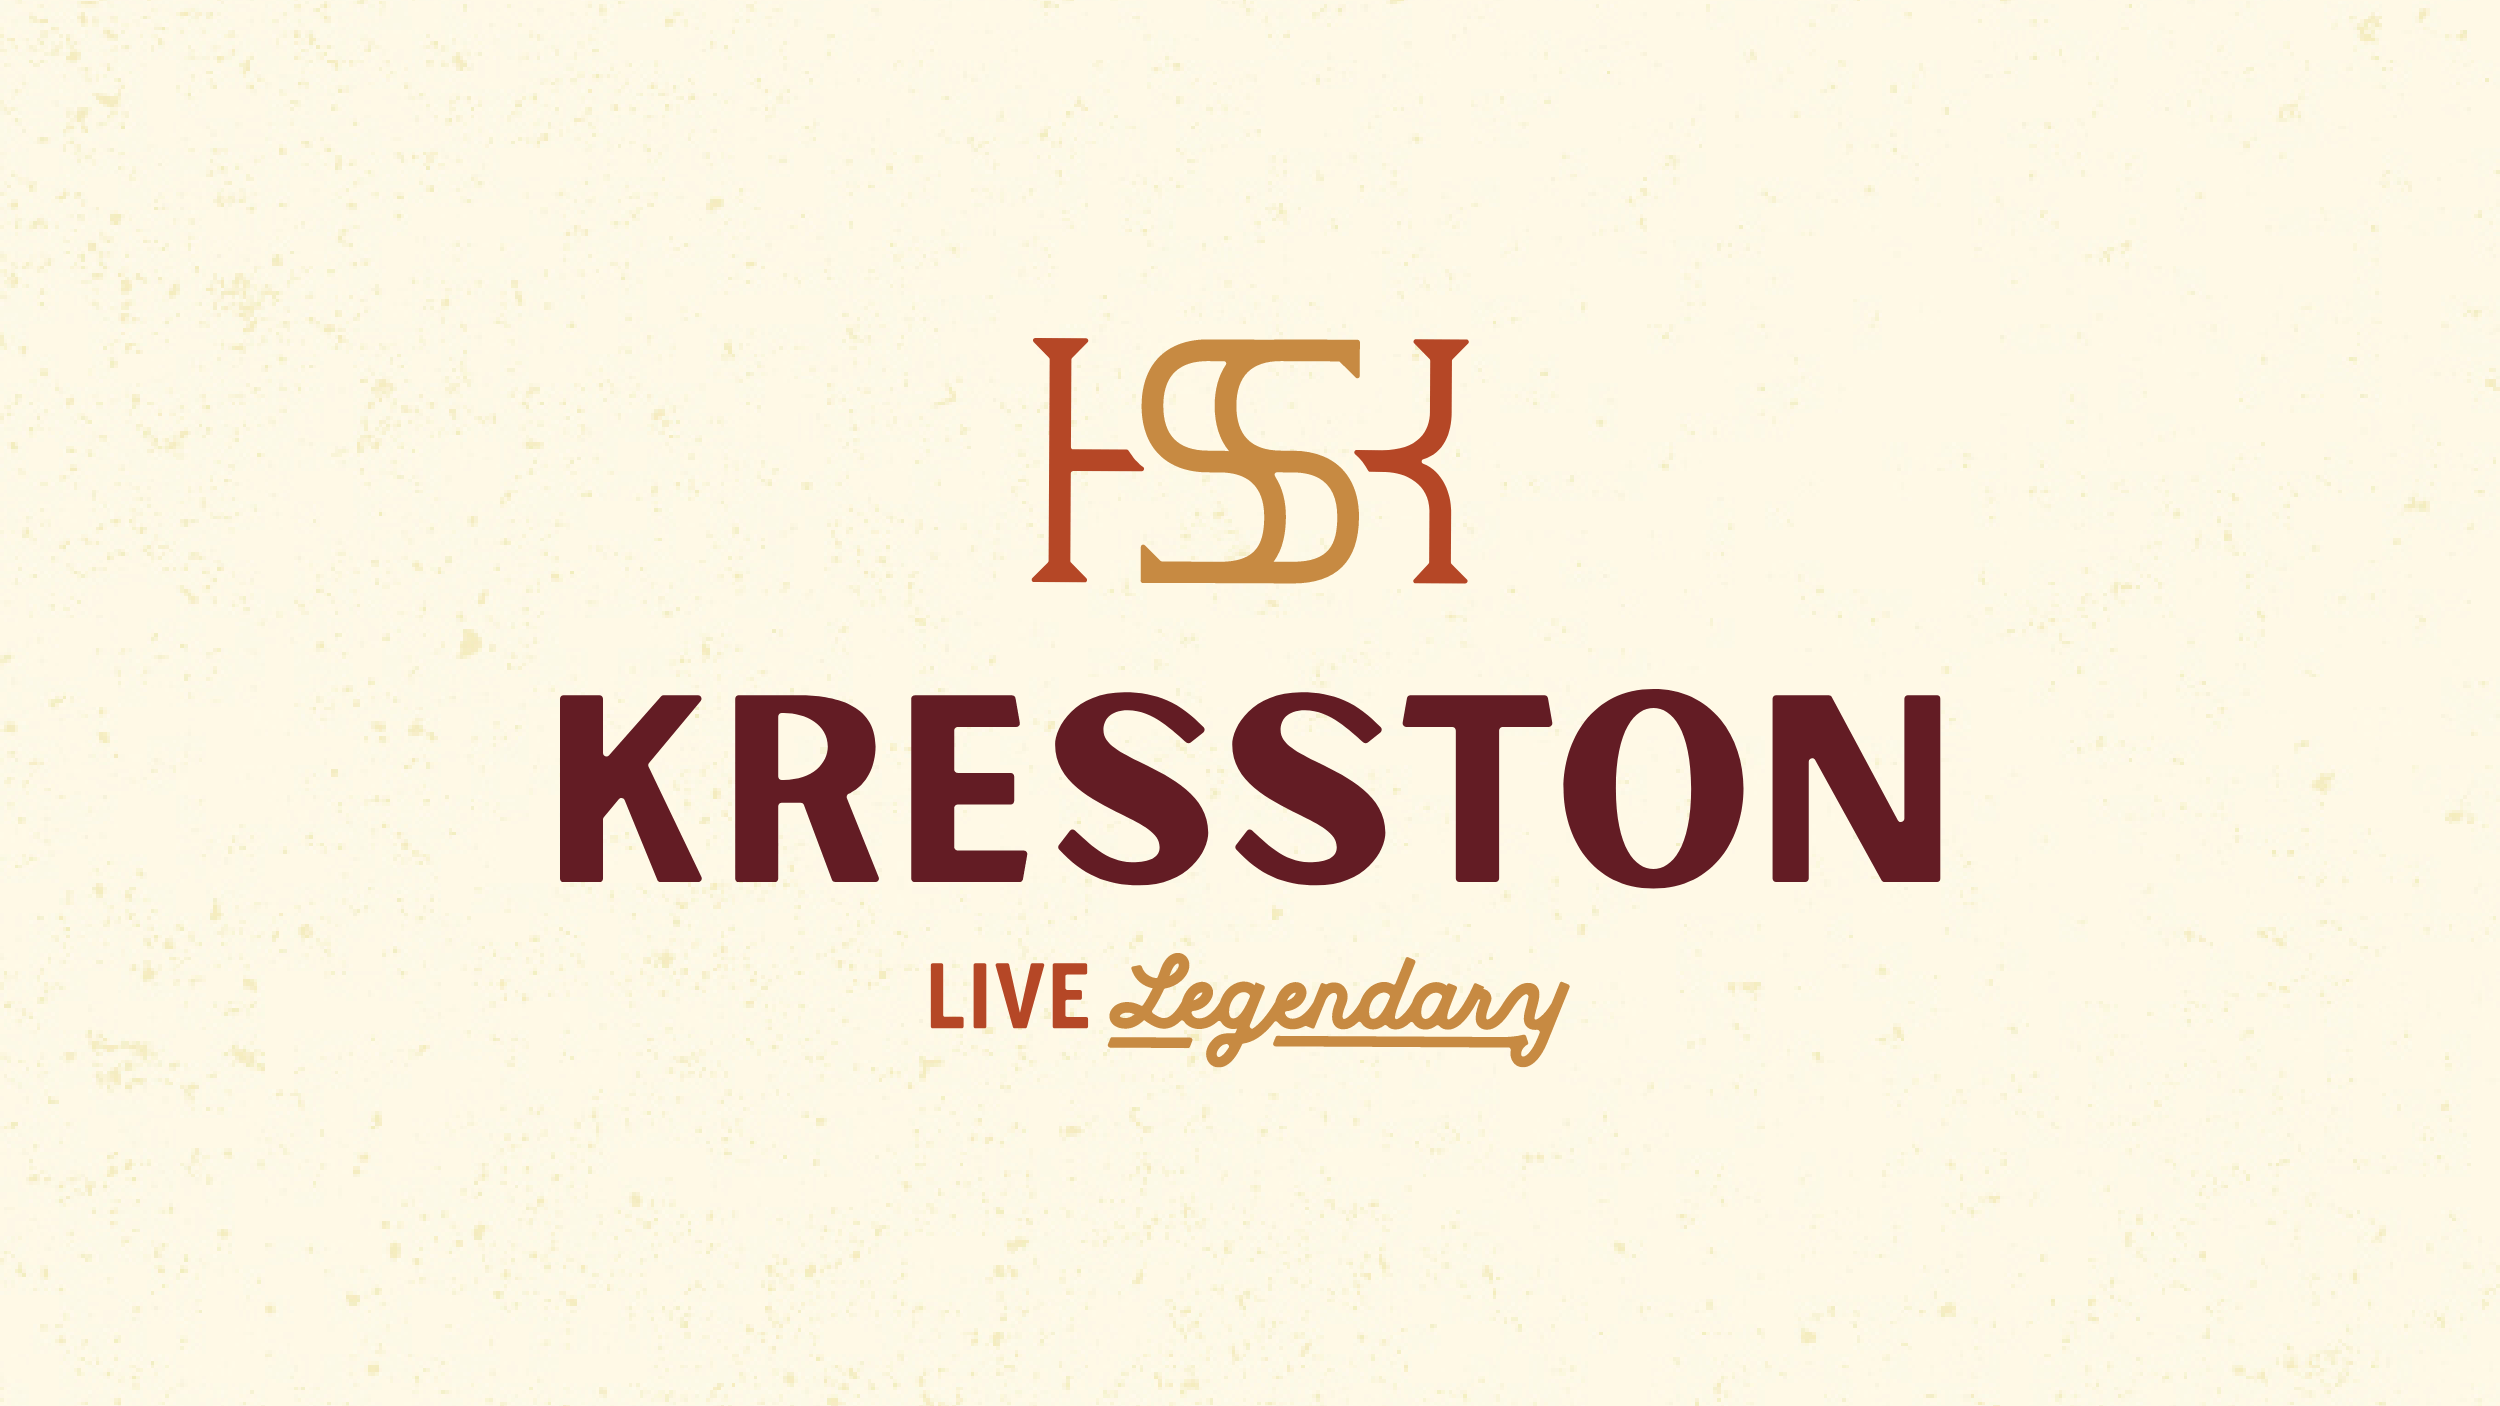 The main Kresston logo with tagline 